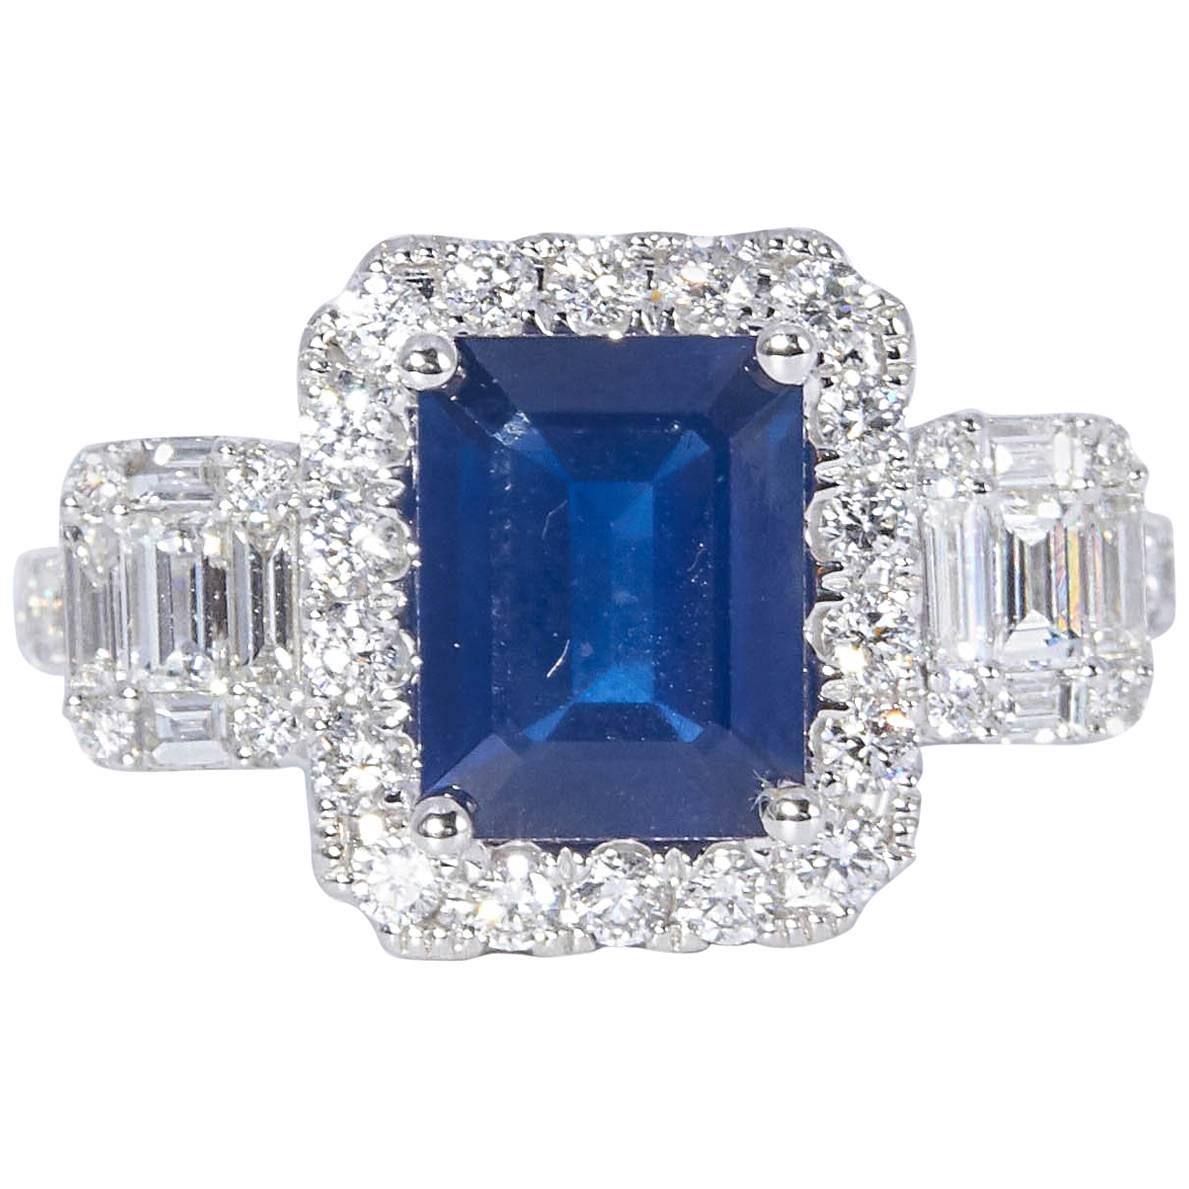 HARBOR D. Diamond Sapphire Cocktail Engagement Ring 3.31 Carats